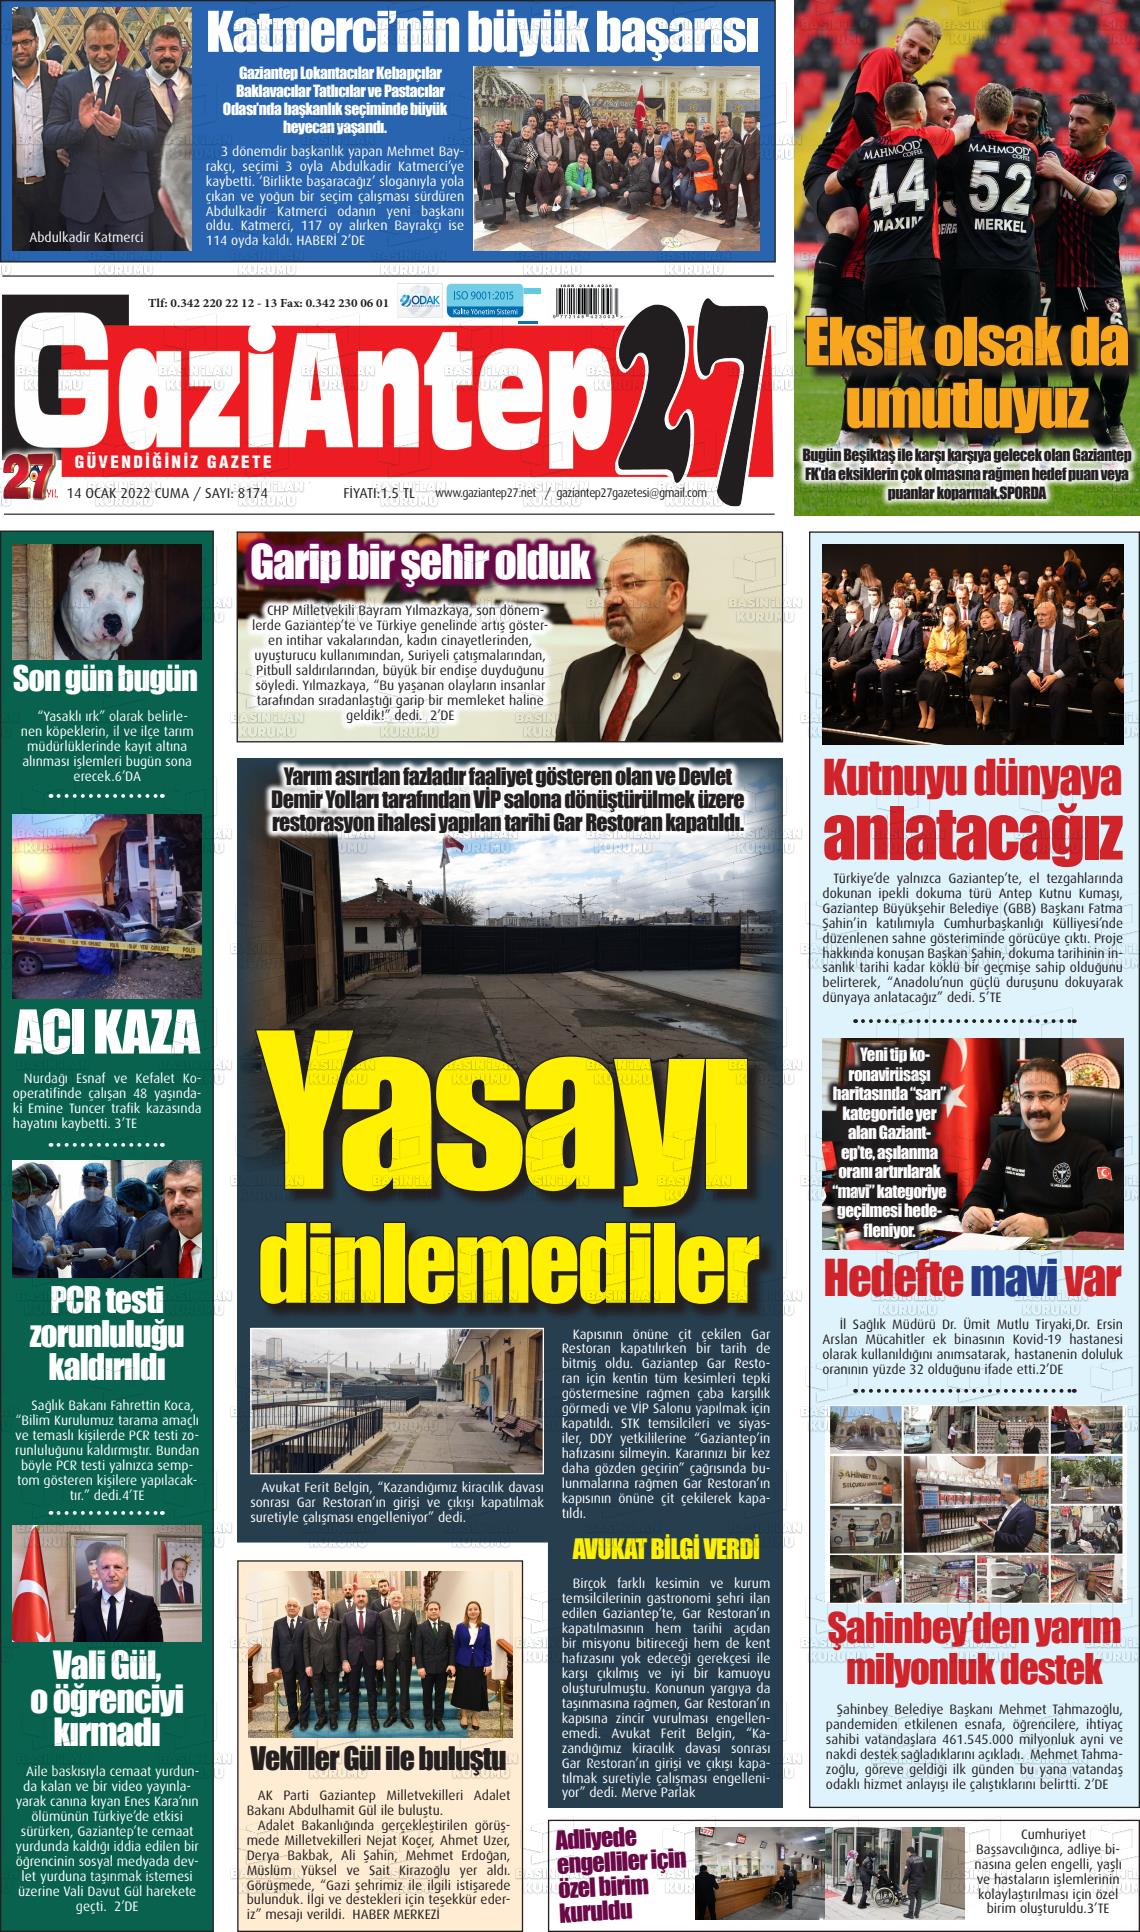 14 Ocak 2022 Gaziantep 27 Gazete Manşeti